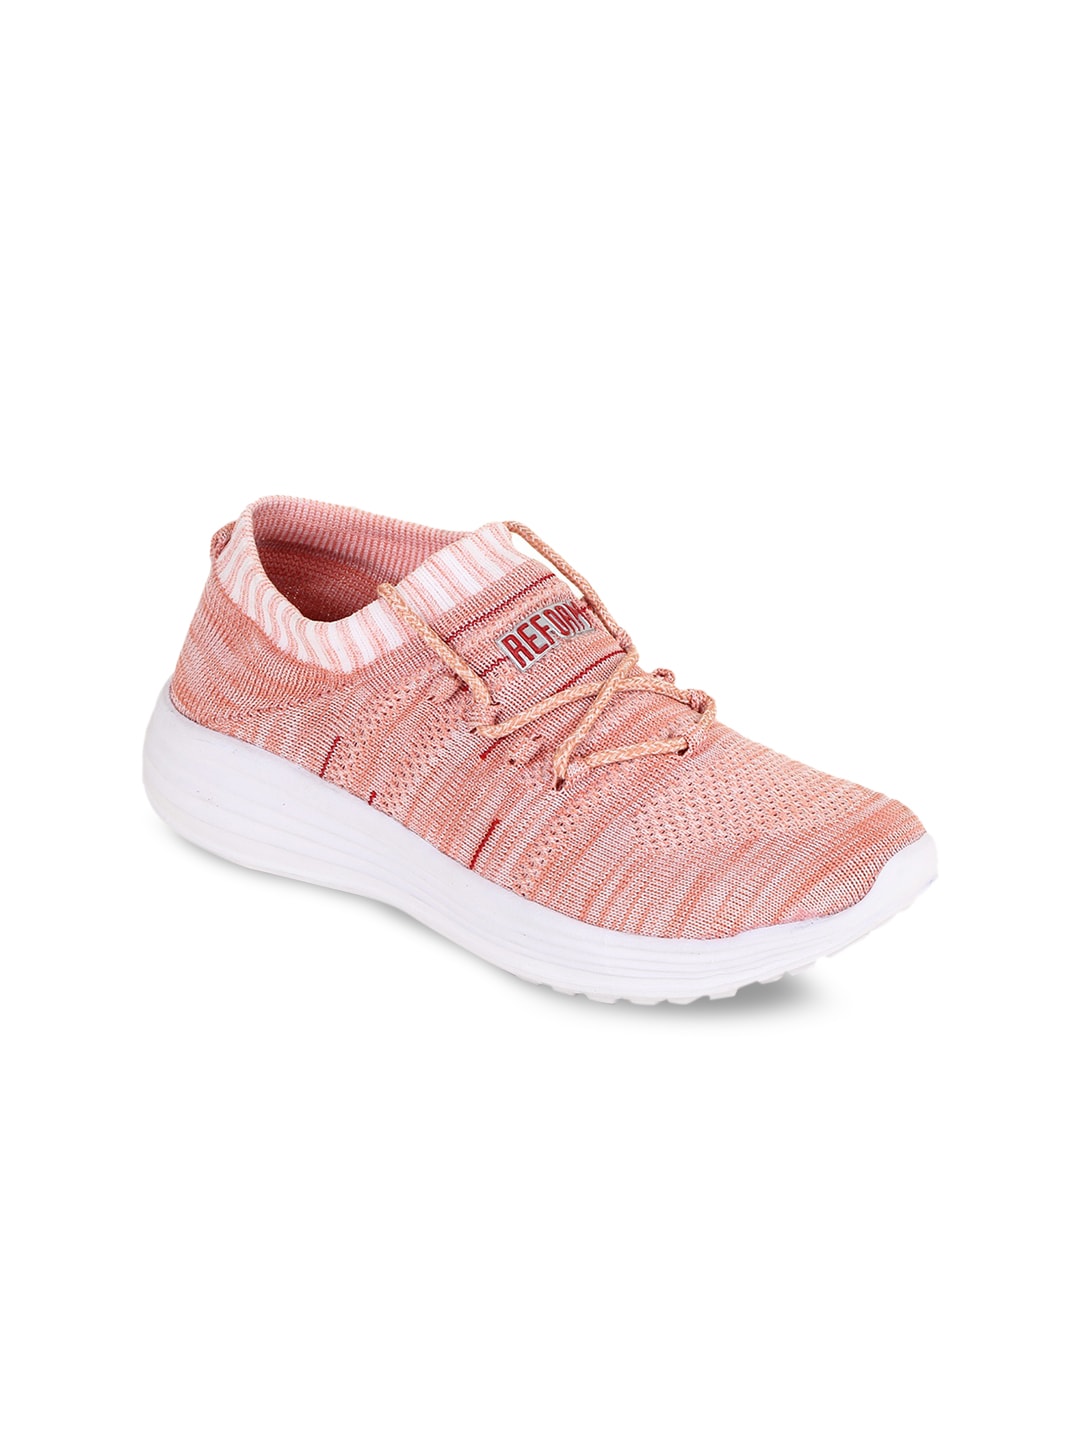 REFOAM Women Pink Mesh Running Shoes Price in India